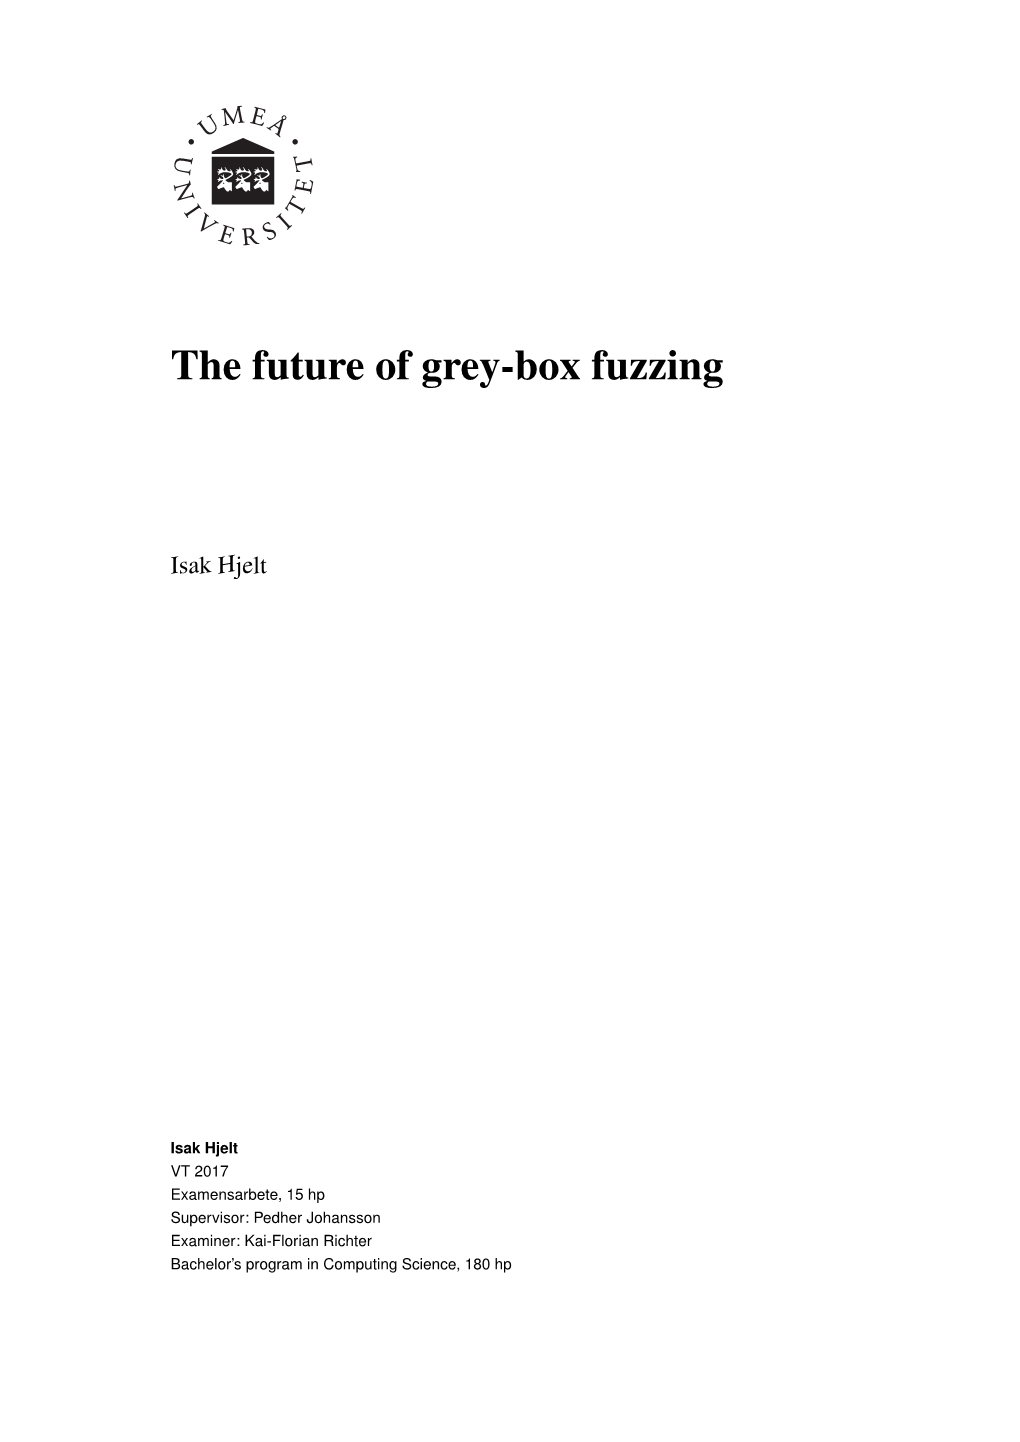 The Future of Grey-Box Fuzzing